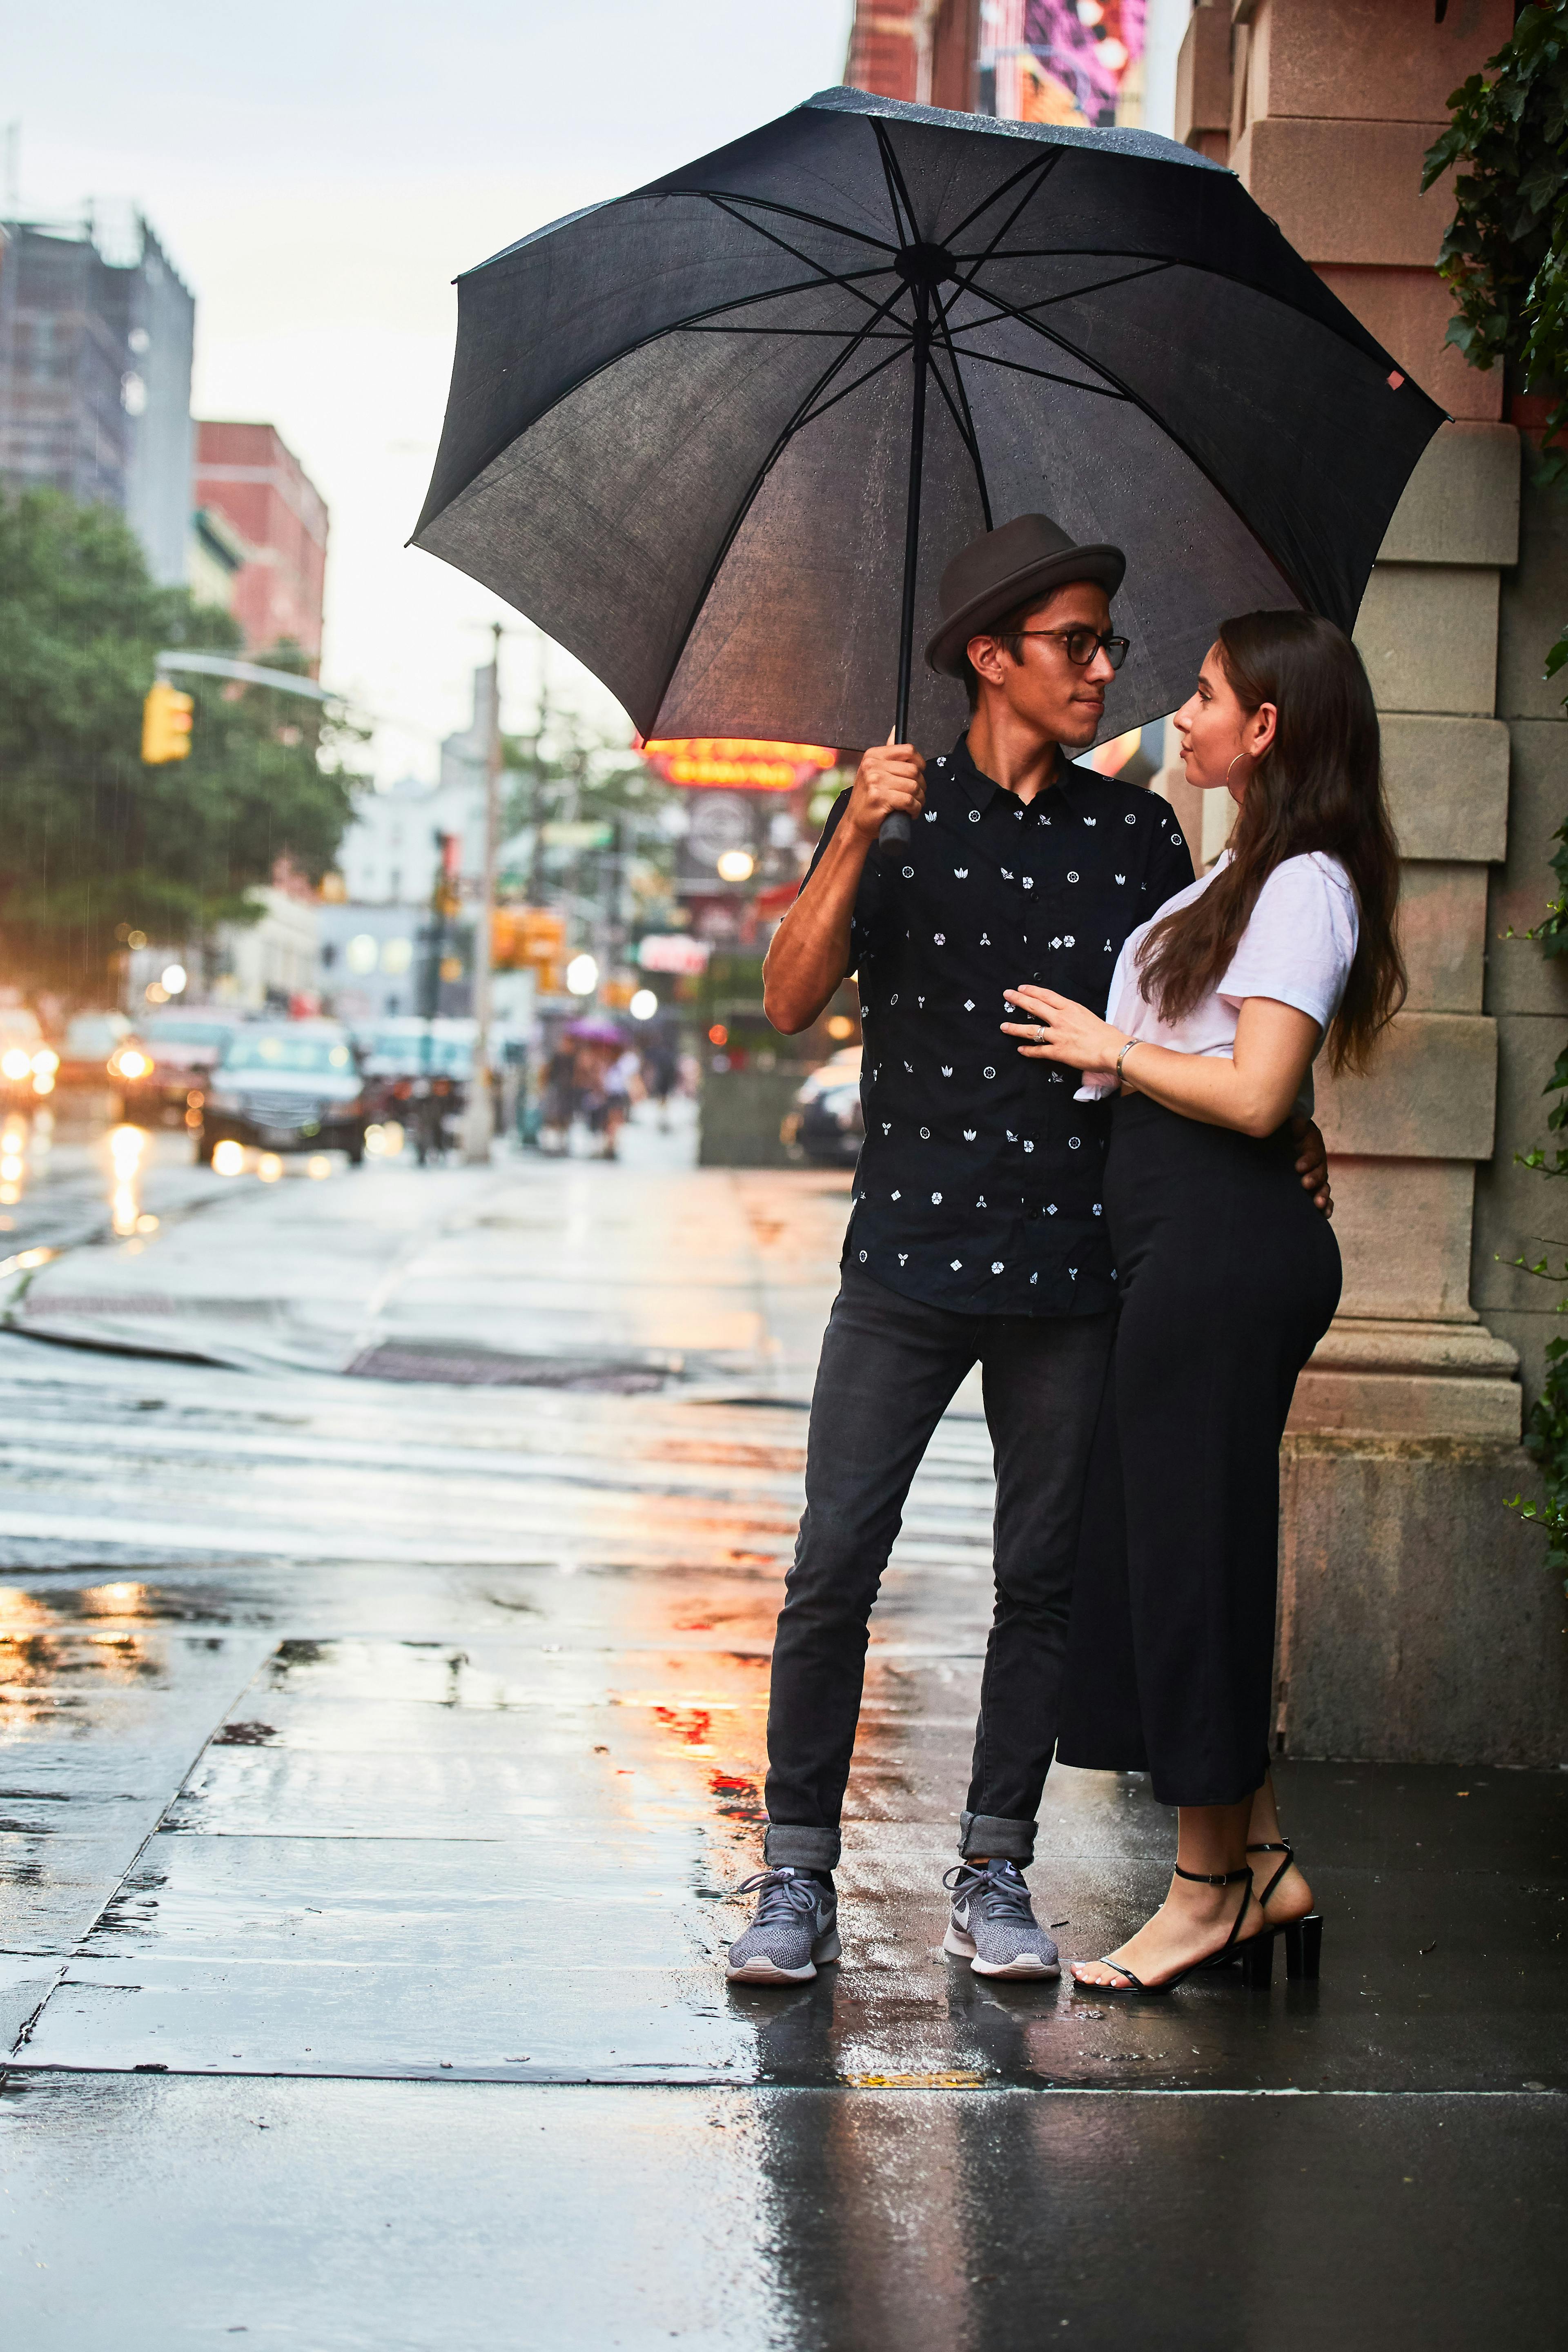 Couple standing under an umbrella on a rainy city street.